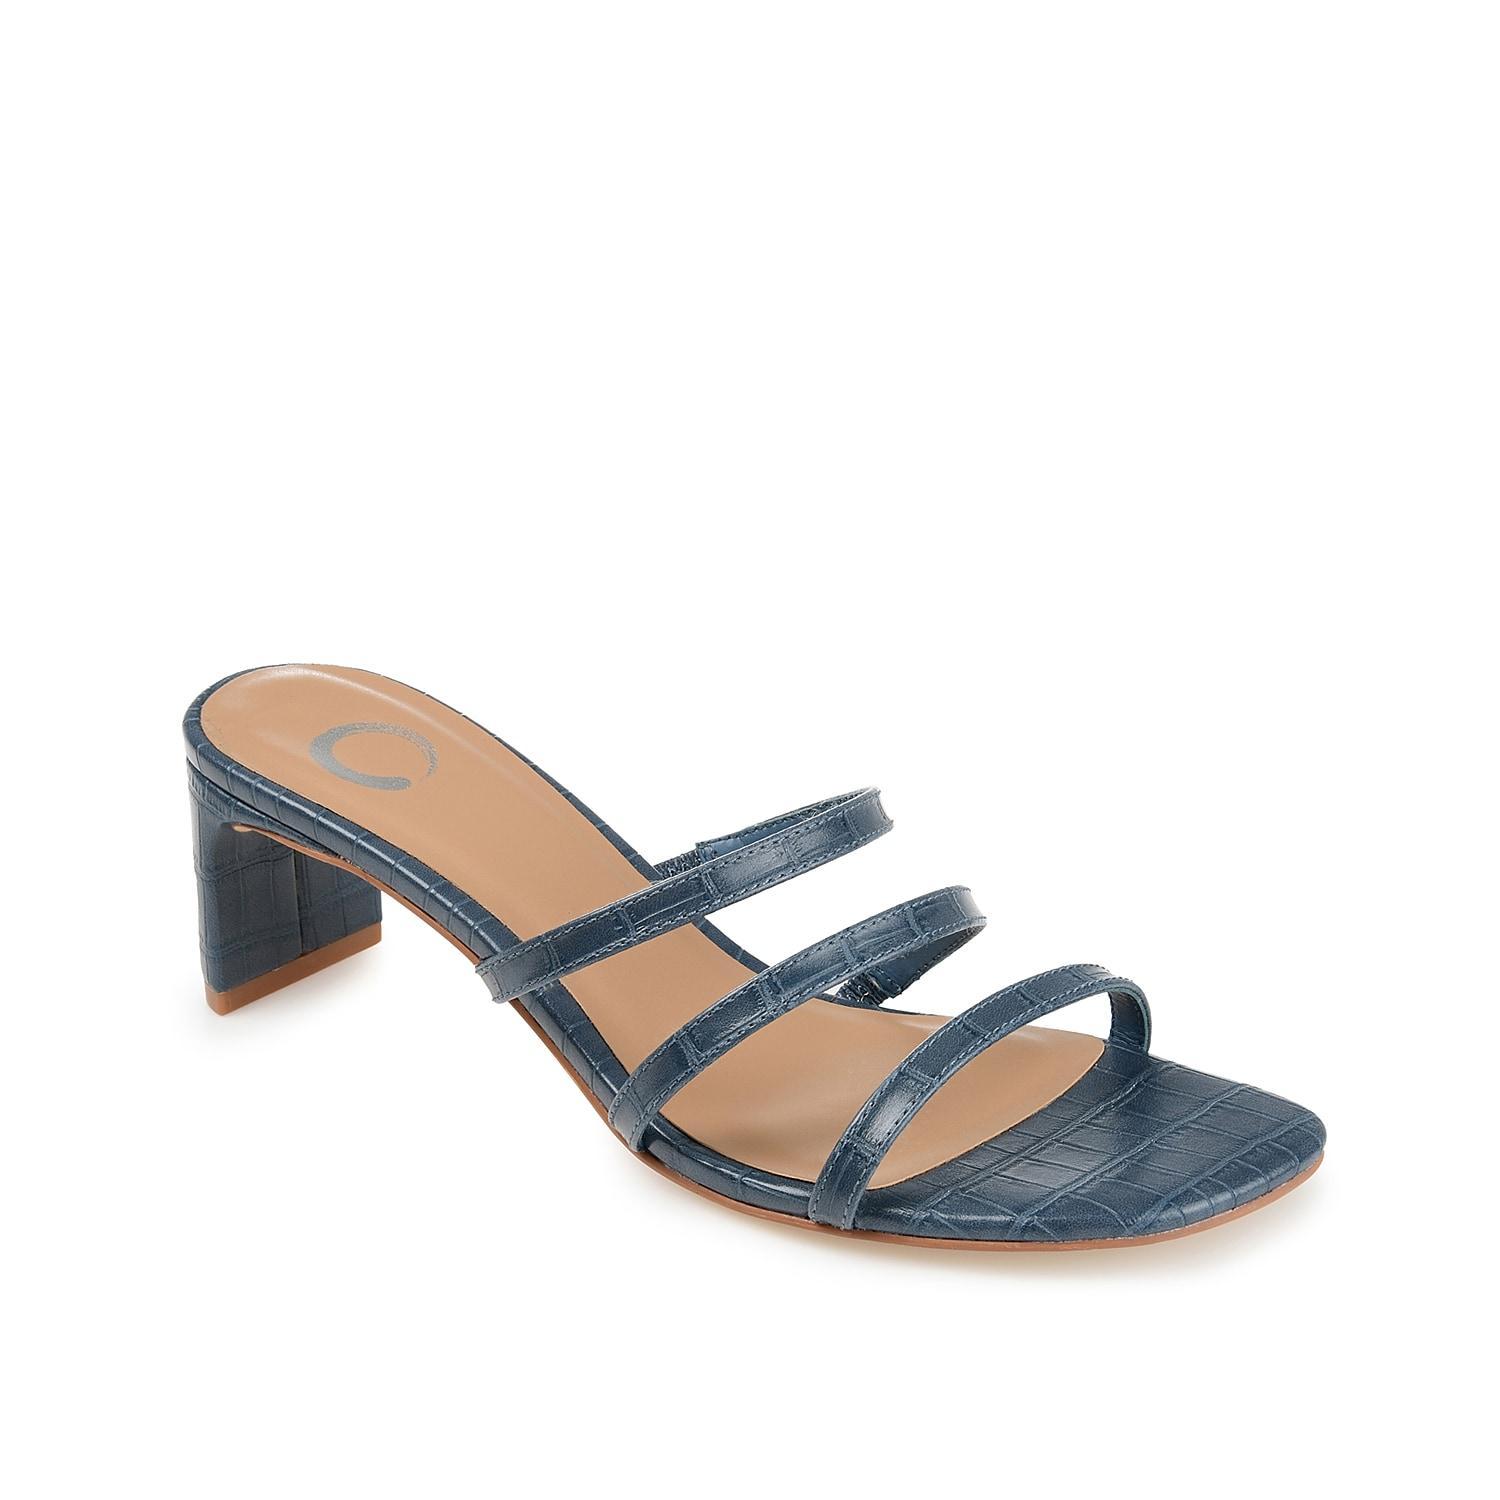 Journee Collection Hariett Womens High Heel Sandals Blue Product Image